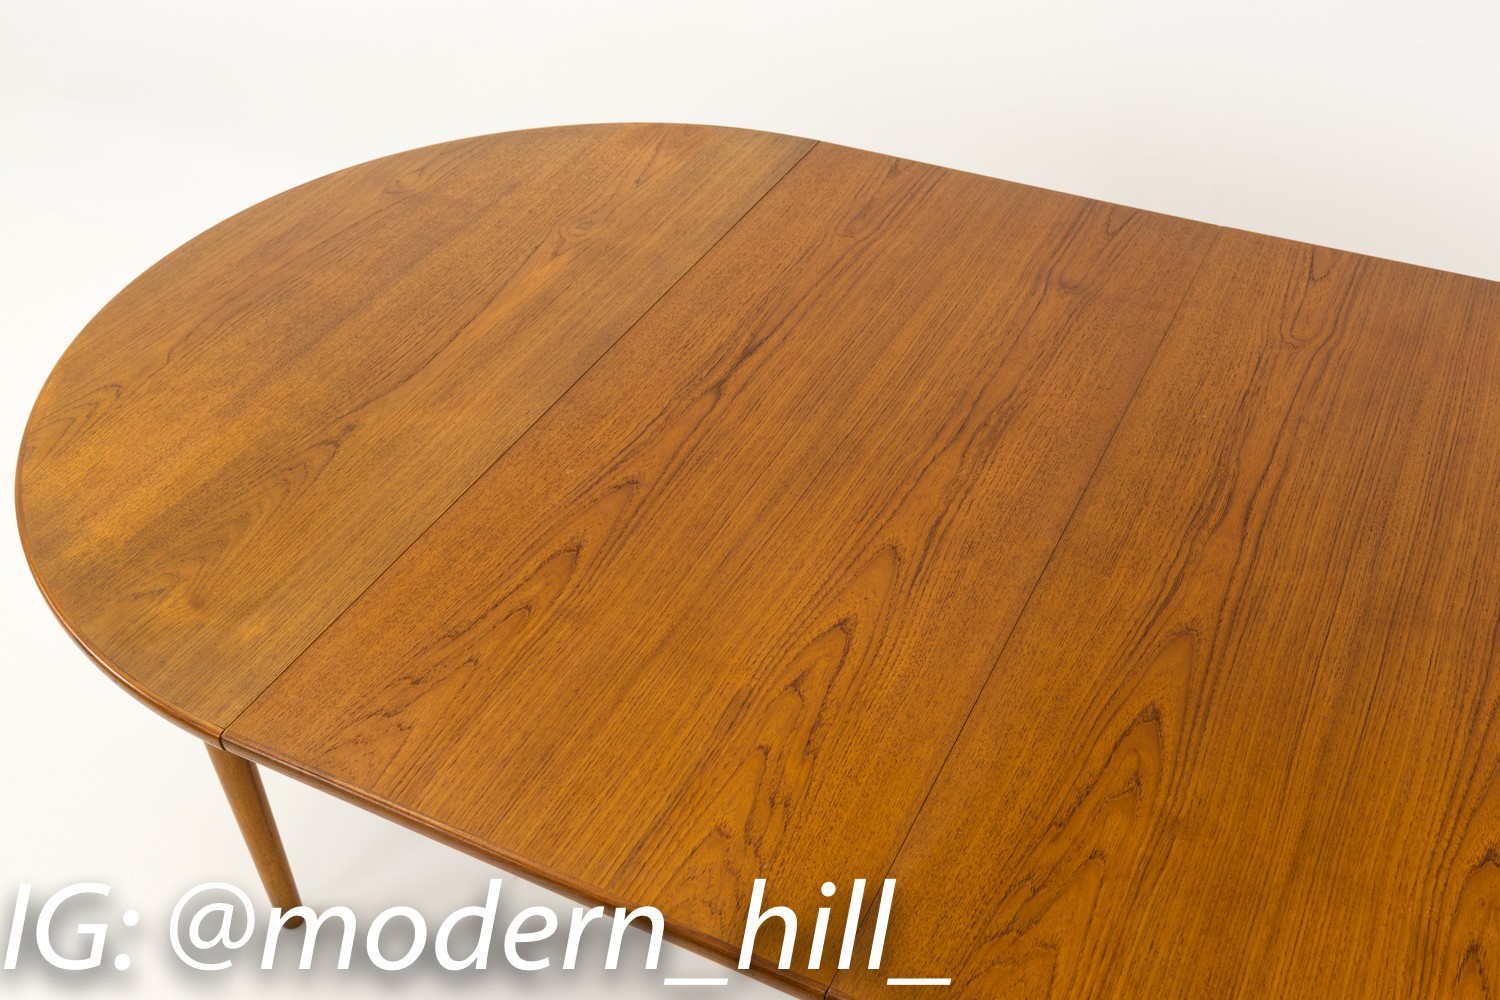 Skovmand and Andersen Danish Teak Round Mid Century Dining Table with 2 Leaves